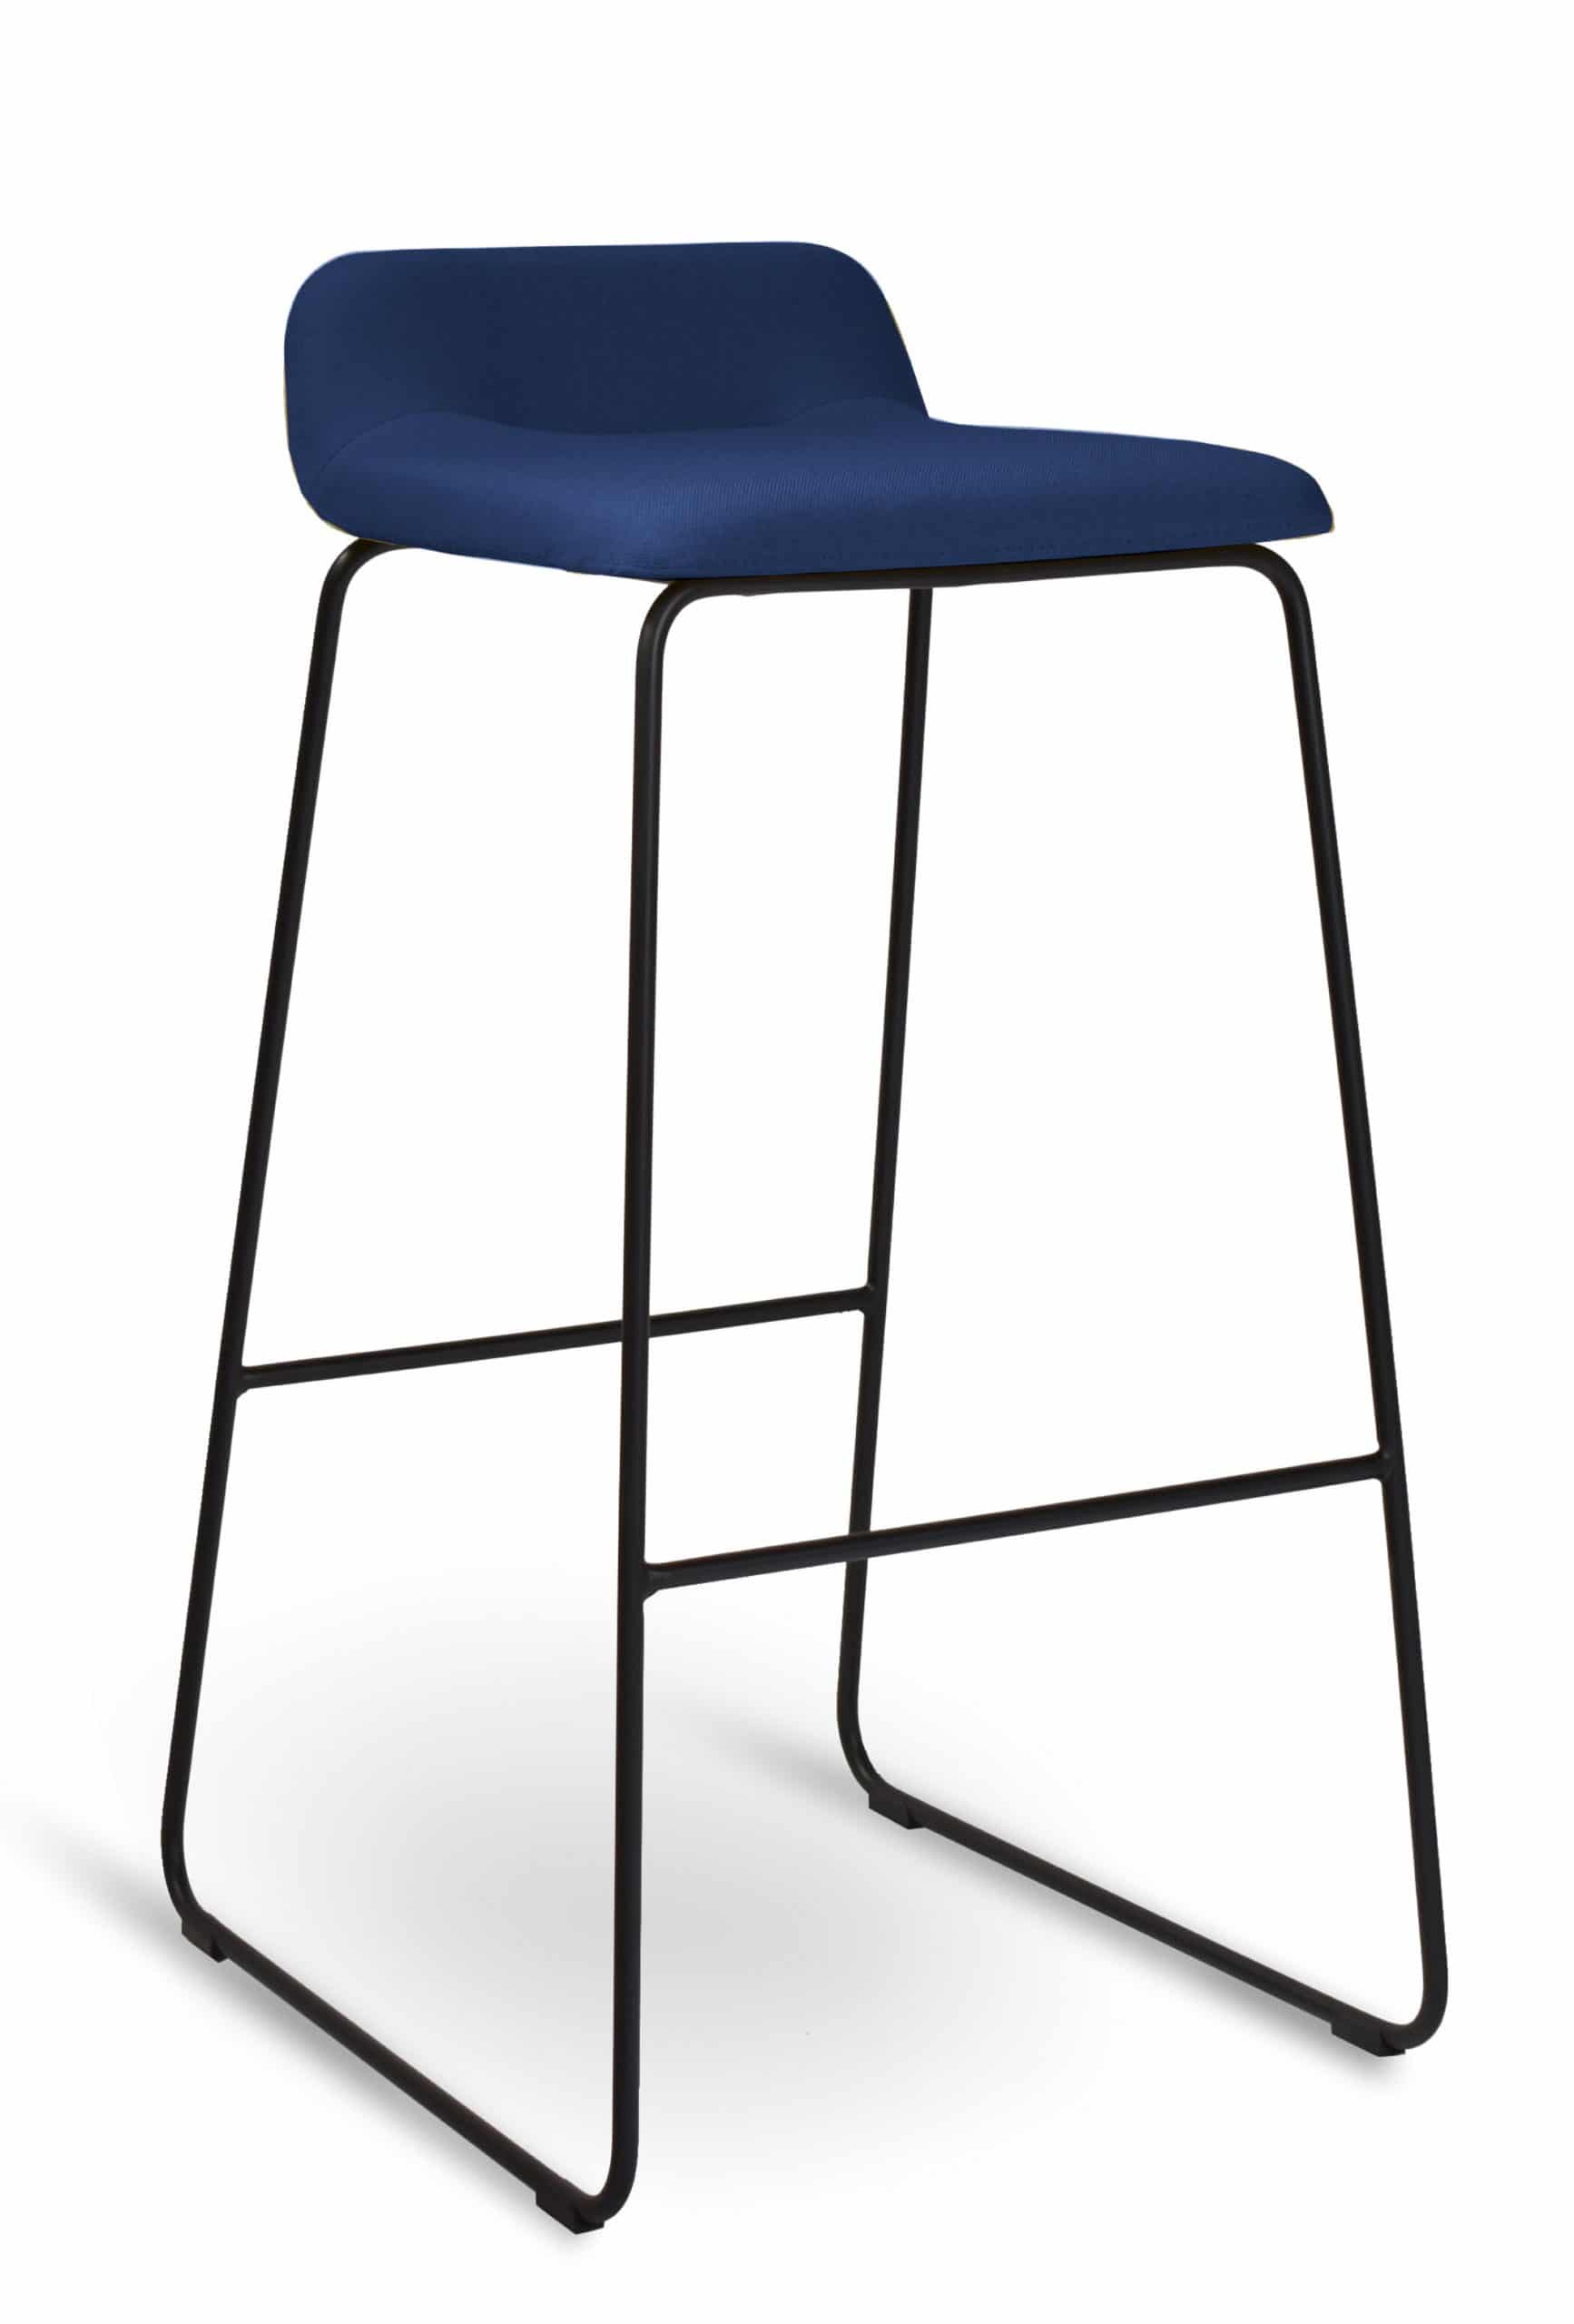 Lolli stool